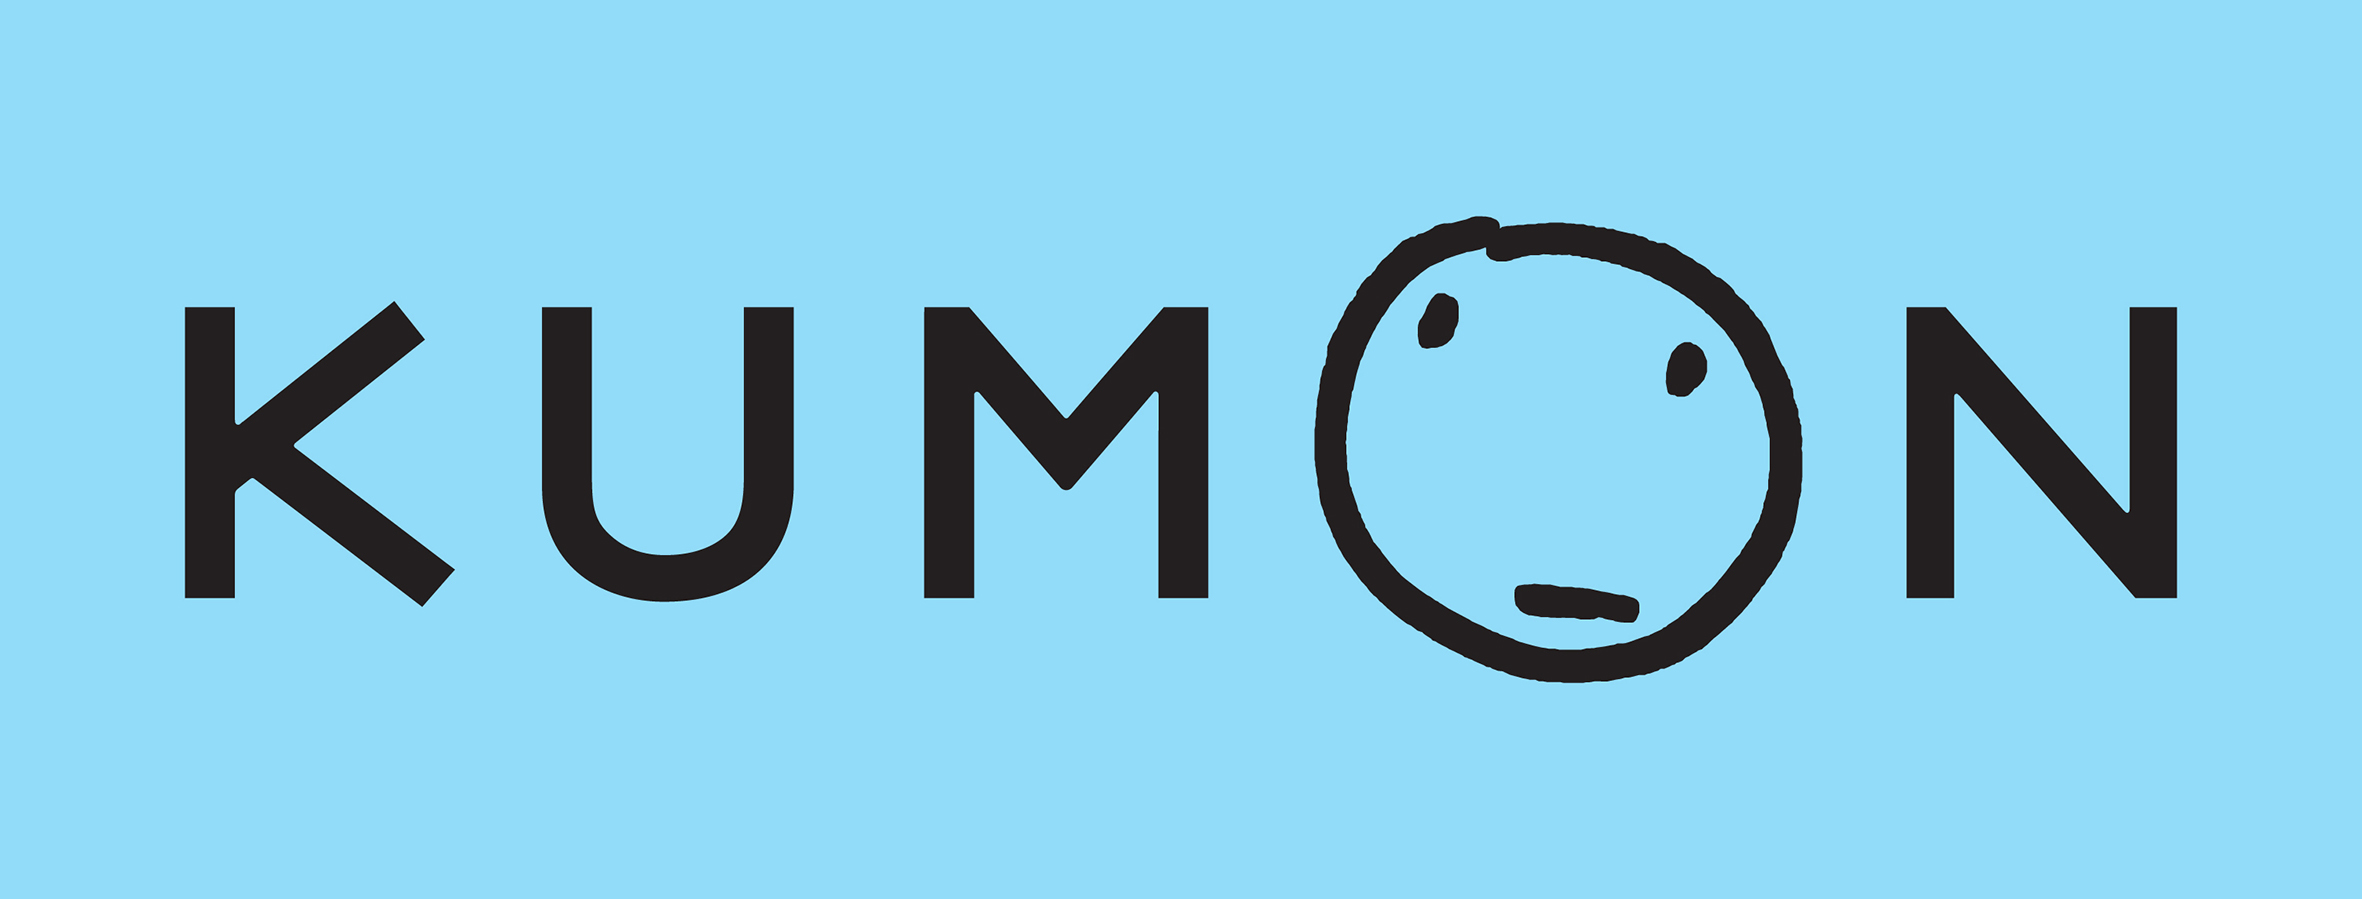 KUMON-Logo rechteckig